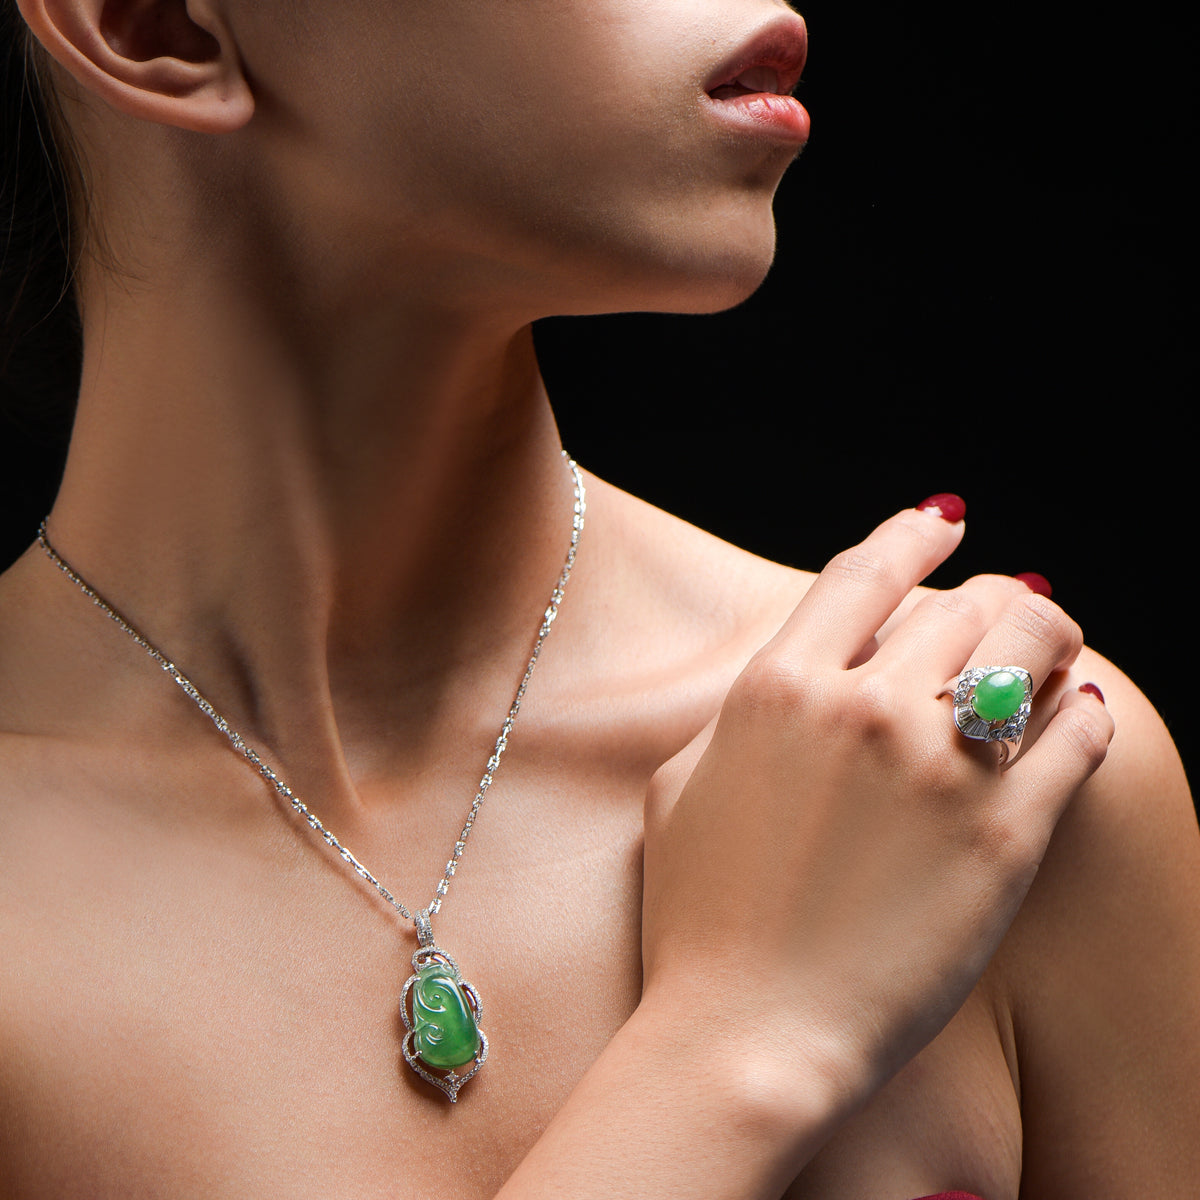 Asian woman wearing an extravagant green jade ring